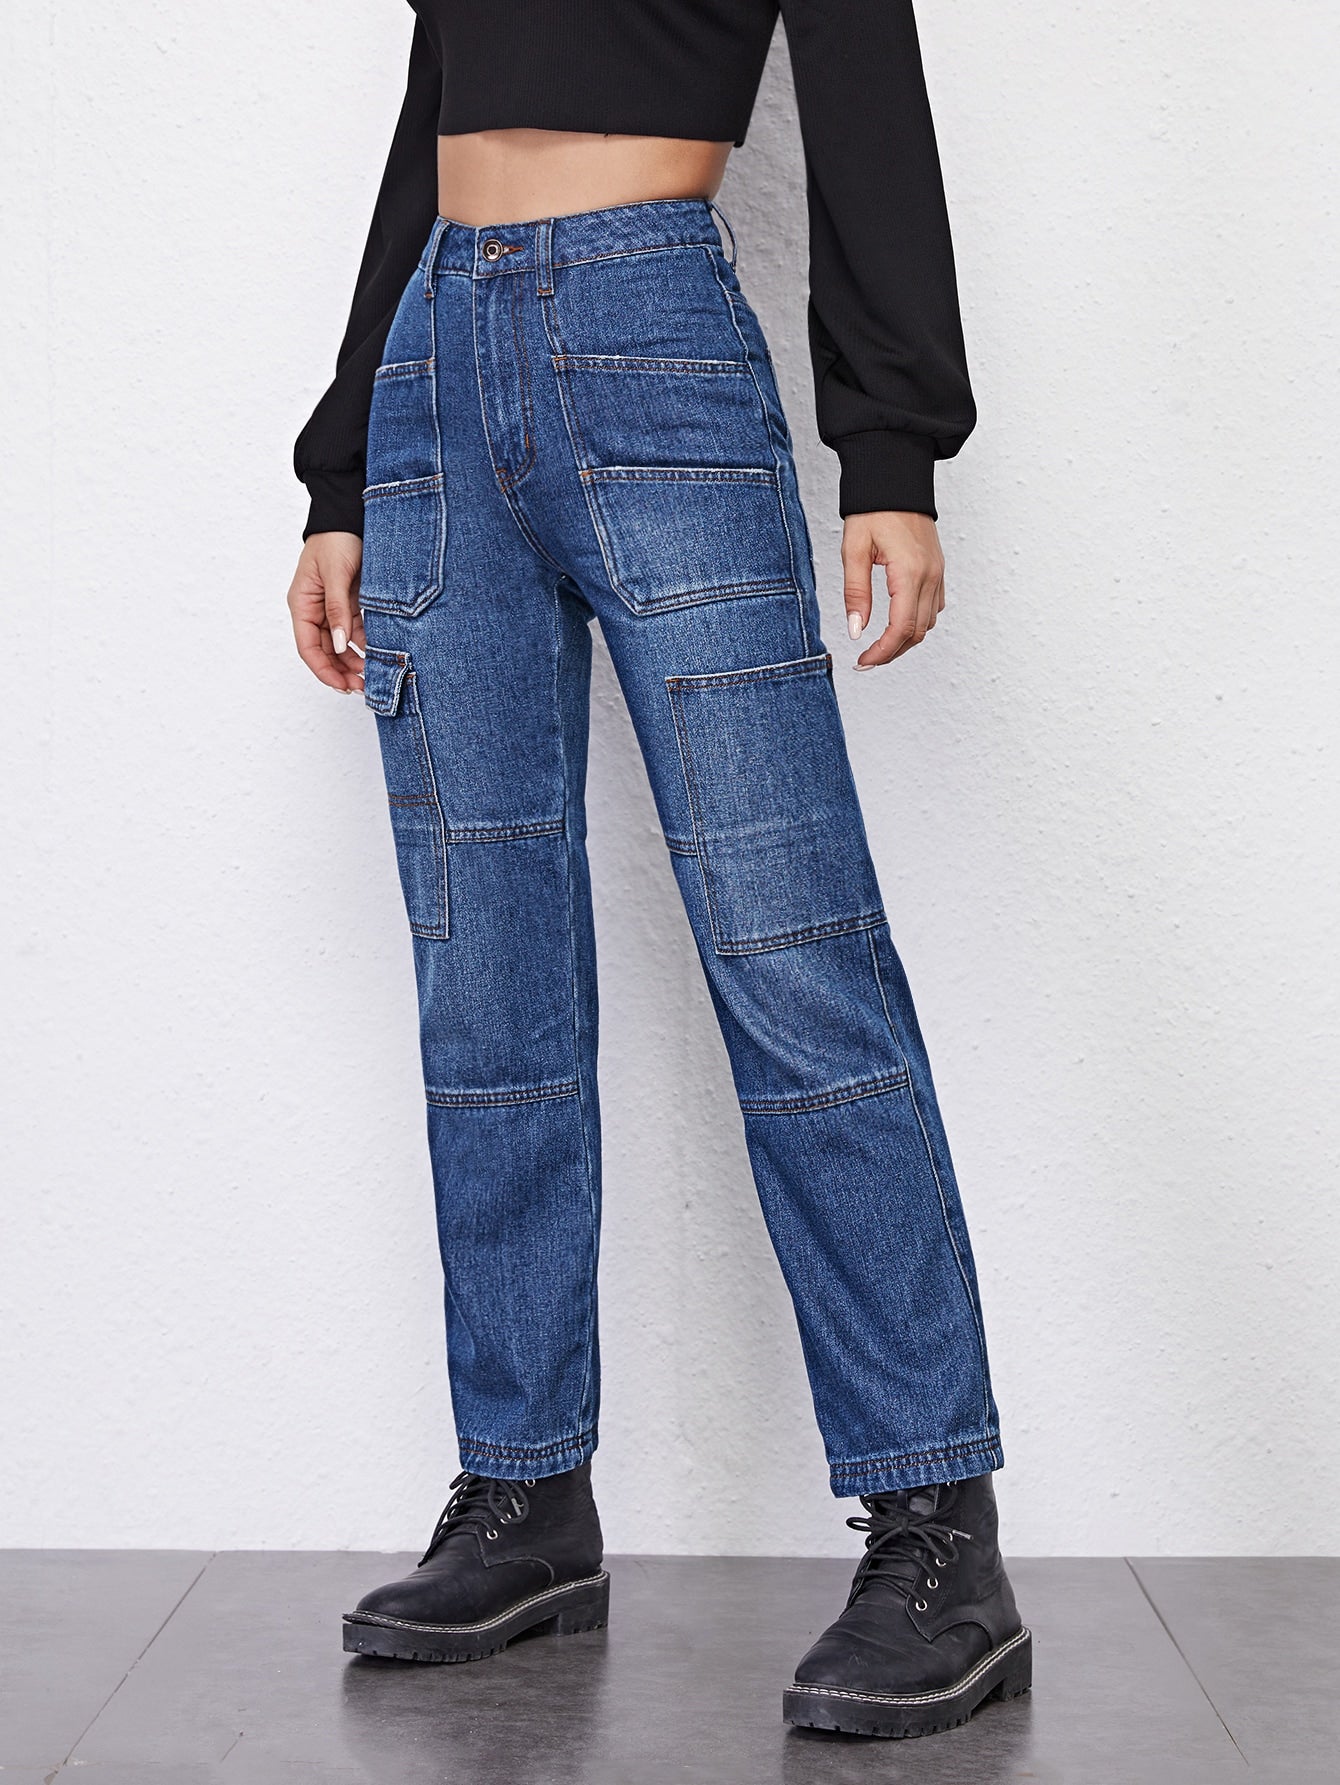 High Waist Patch Pocket Straight Jeans